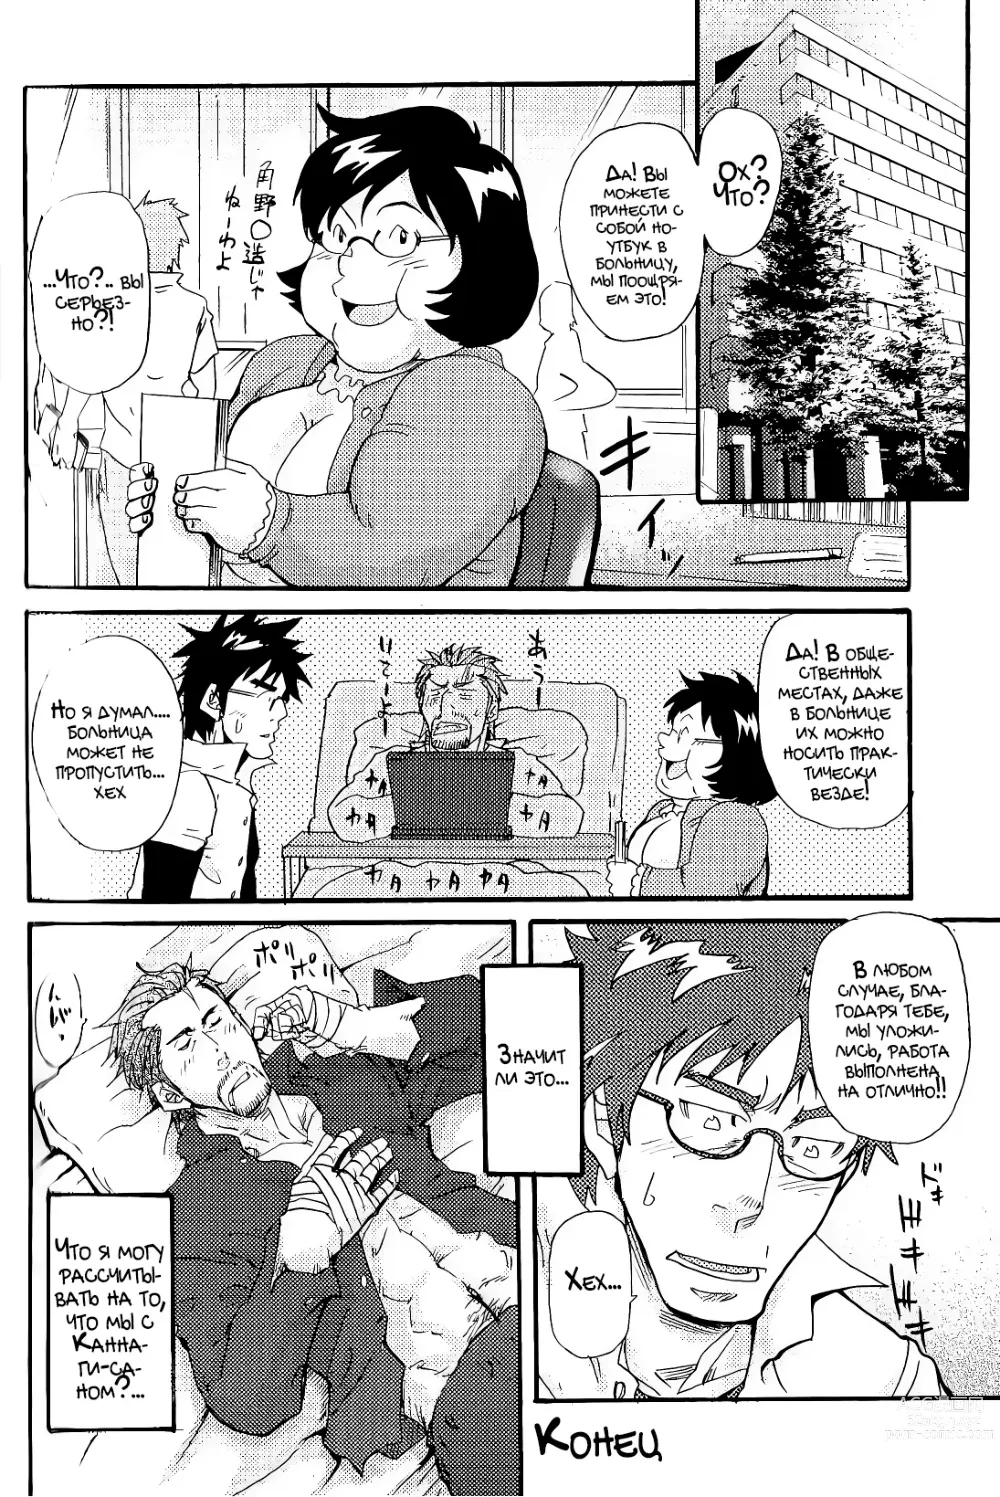 Page 26 of manga 10 дней жизни в одном хаори!!